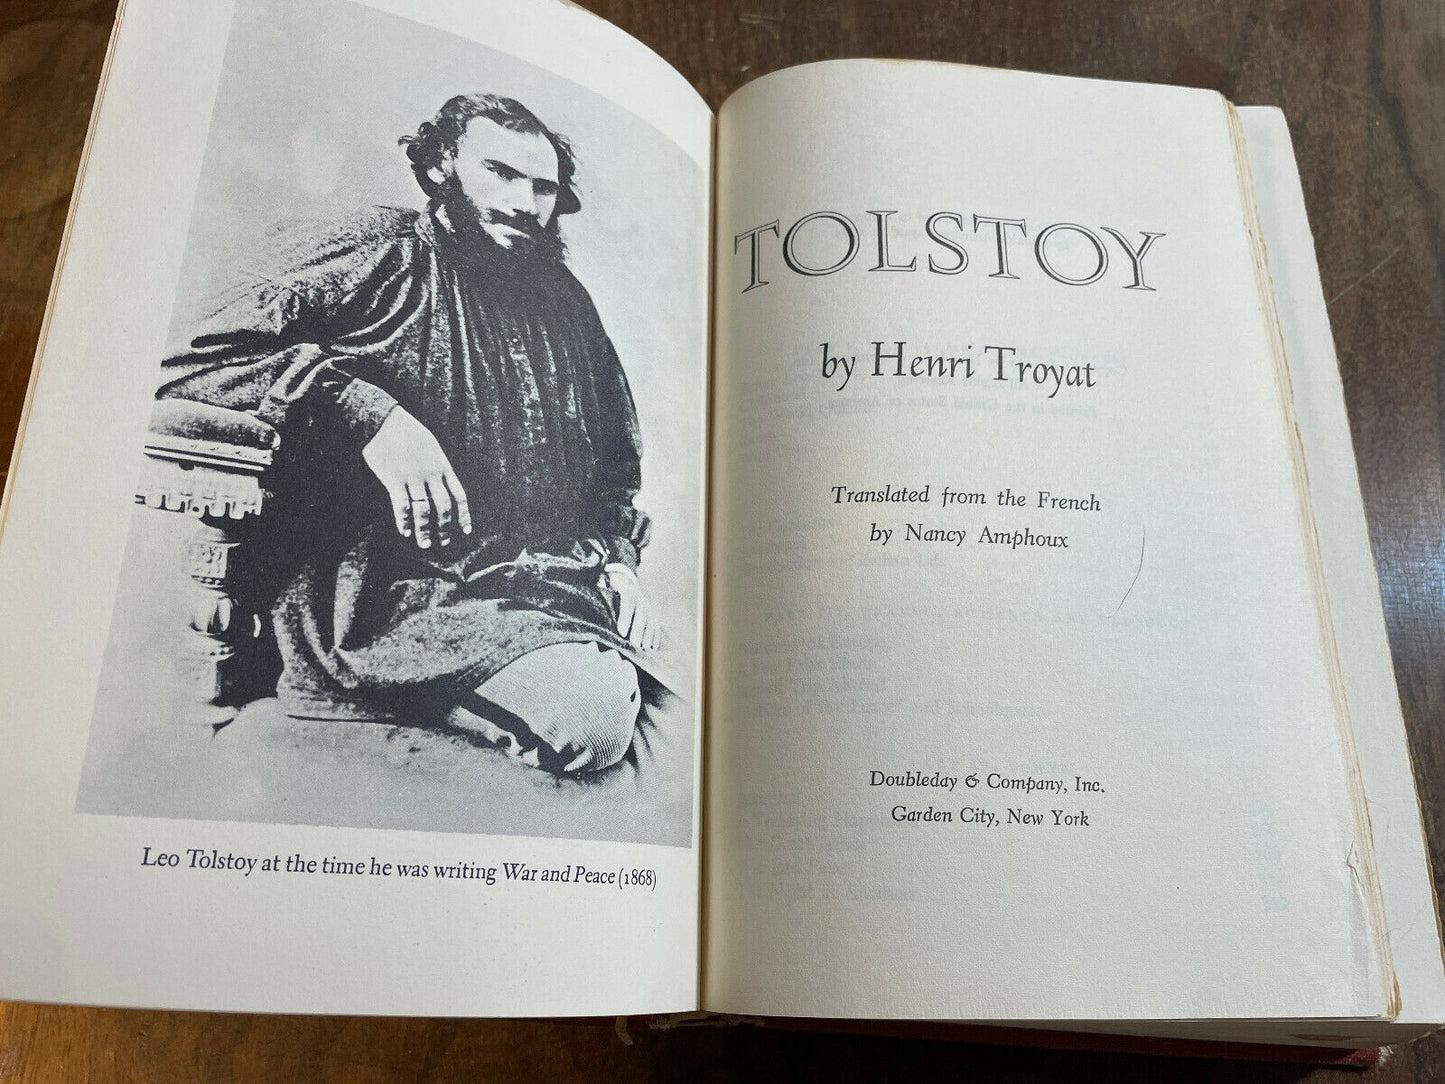 Tolstoy by Henri Troyat, Book Club Edition (1967)